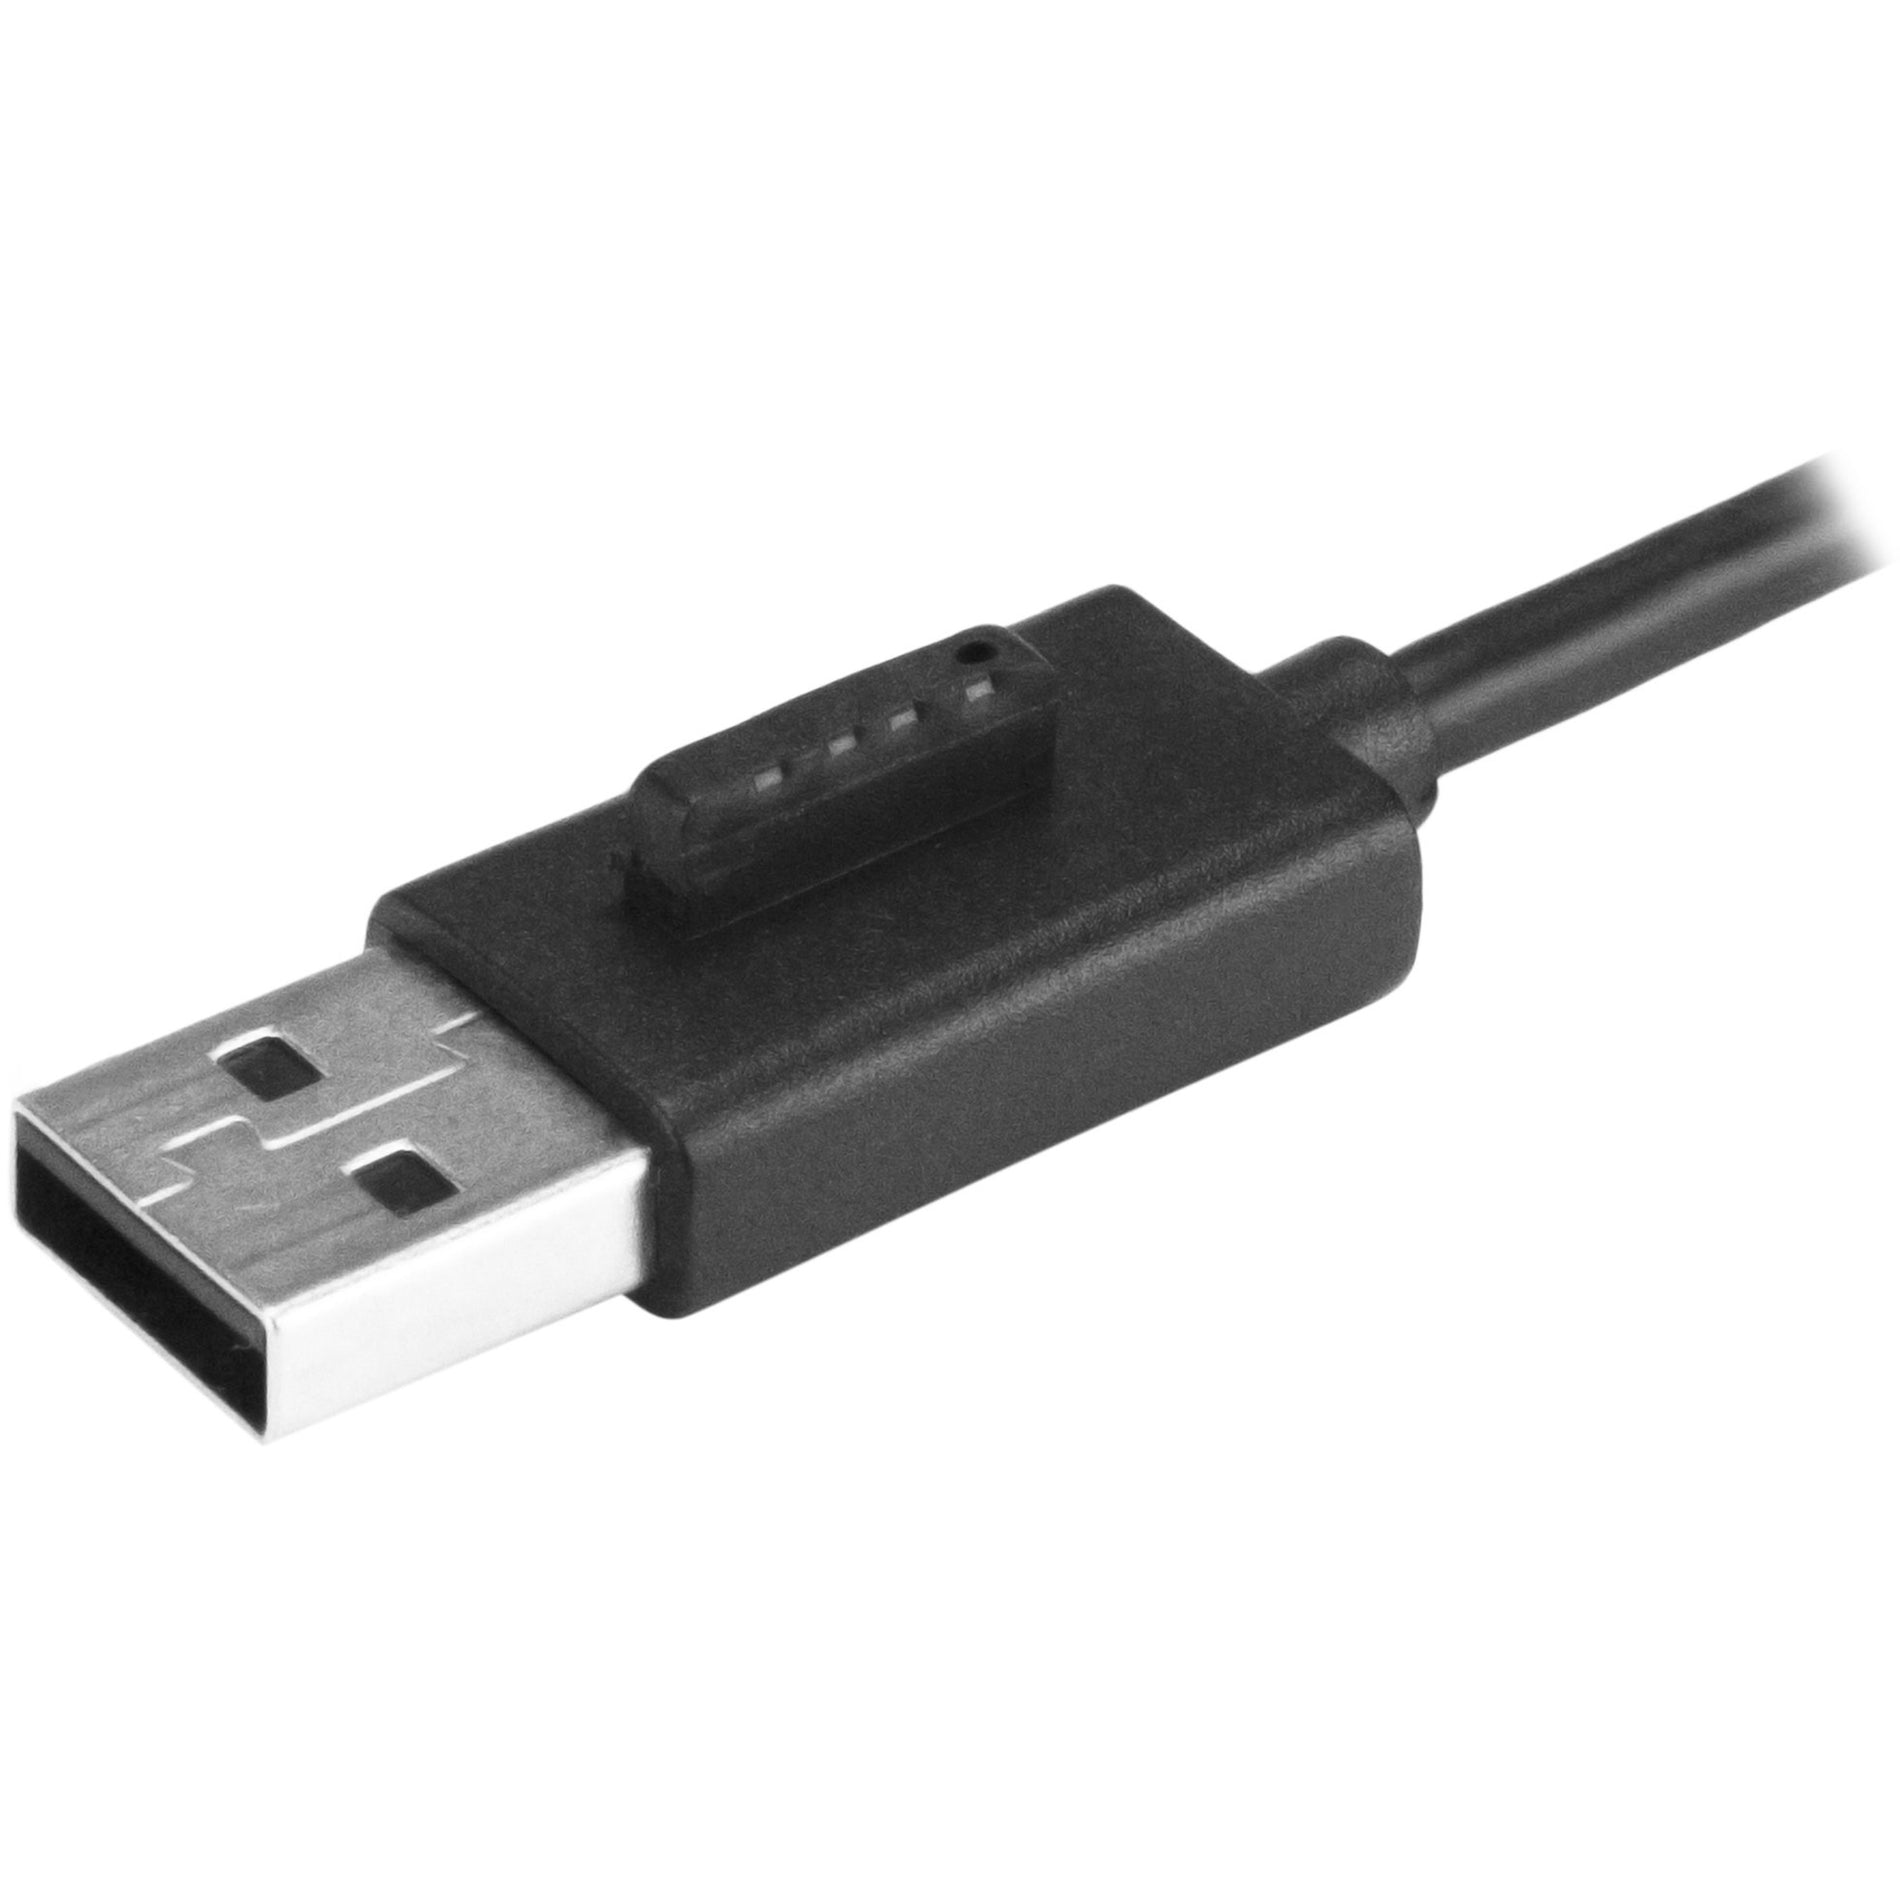 StarTech.com ST4200MINI2 4 Port Portable USB 2.0 Hub with Built-in Cable Compact Mini USB Hub